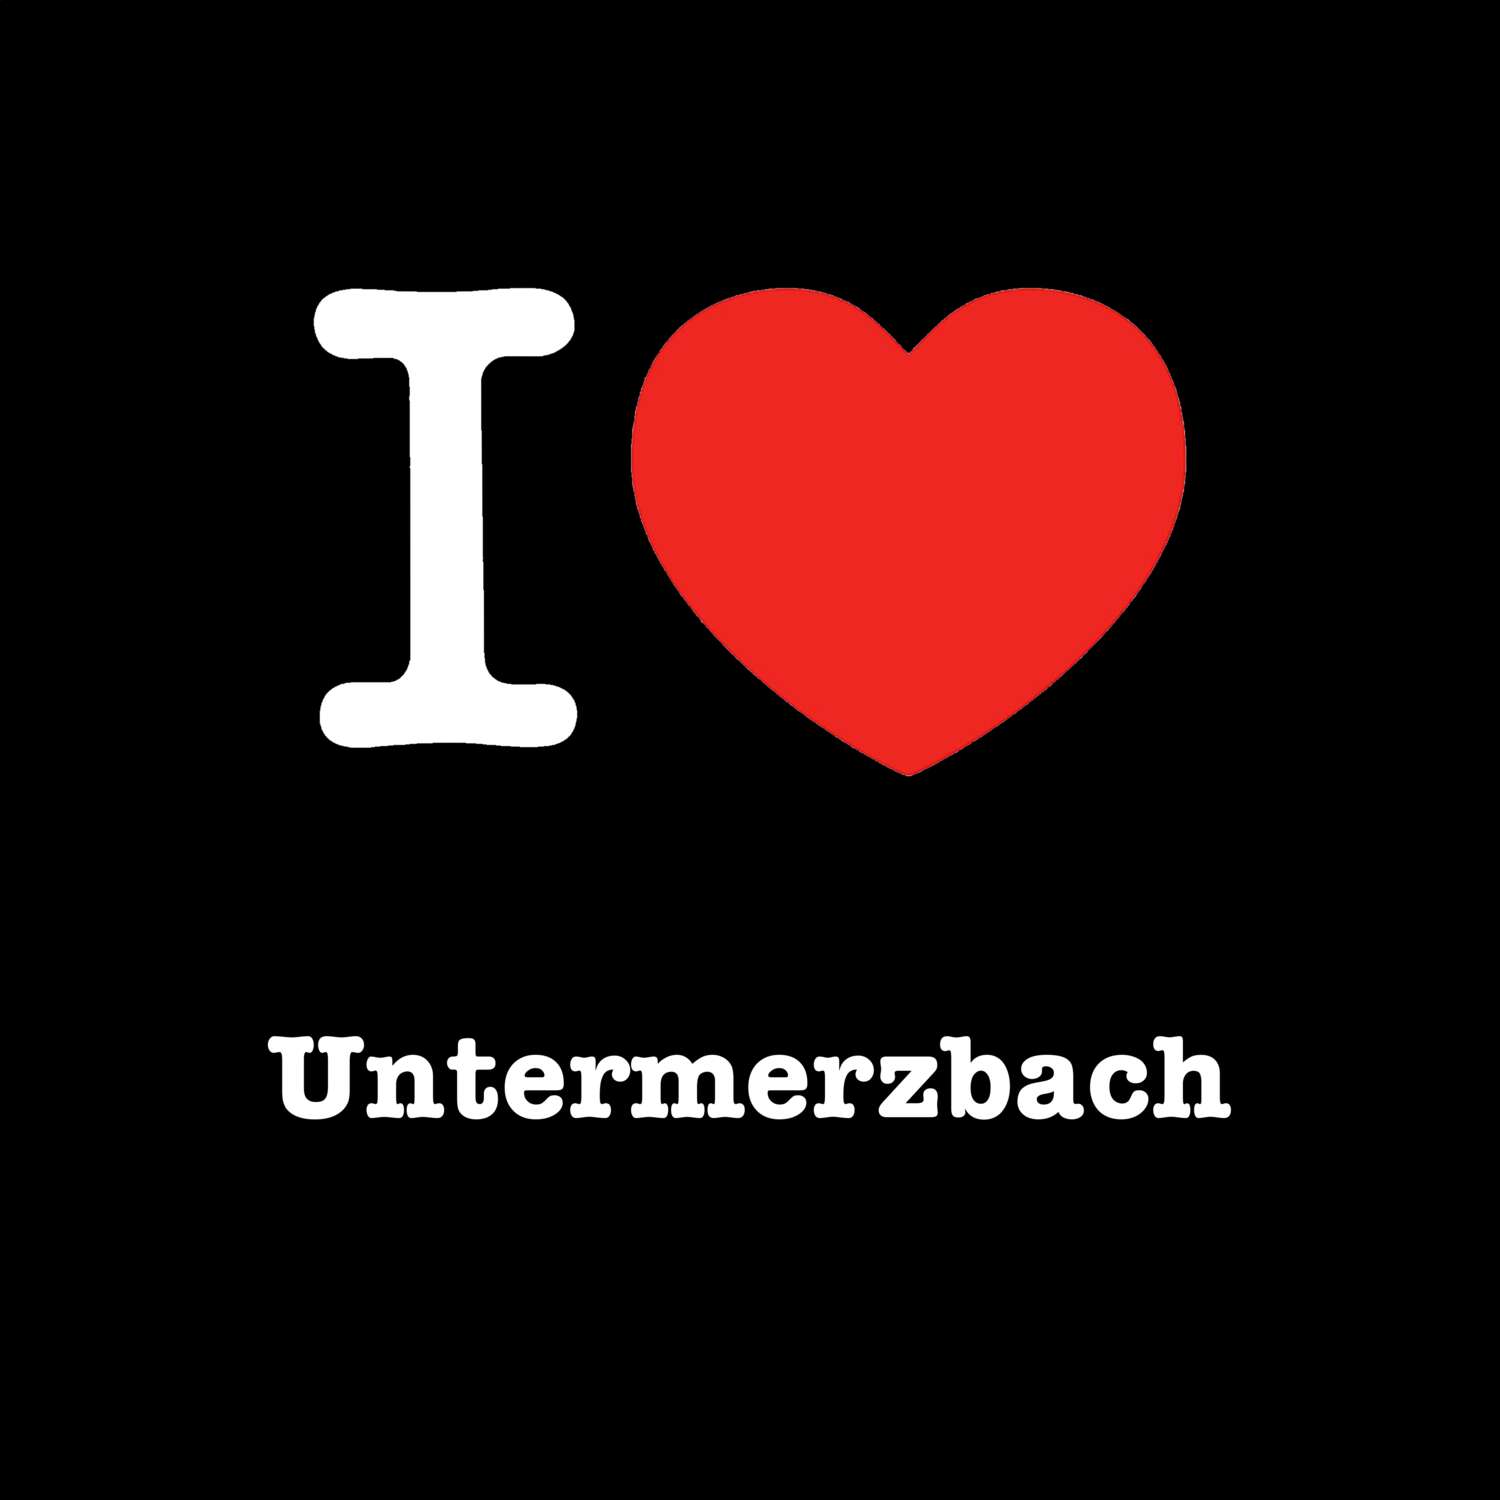 Untermerzbach T-Shirt »I love«